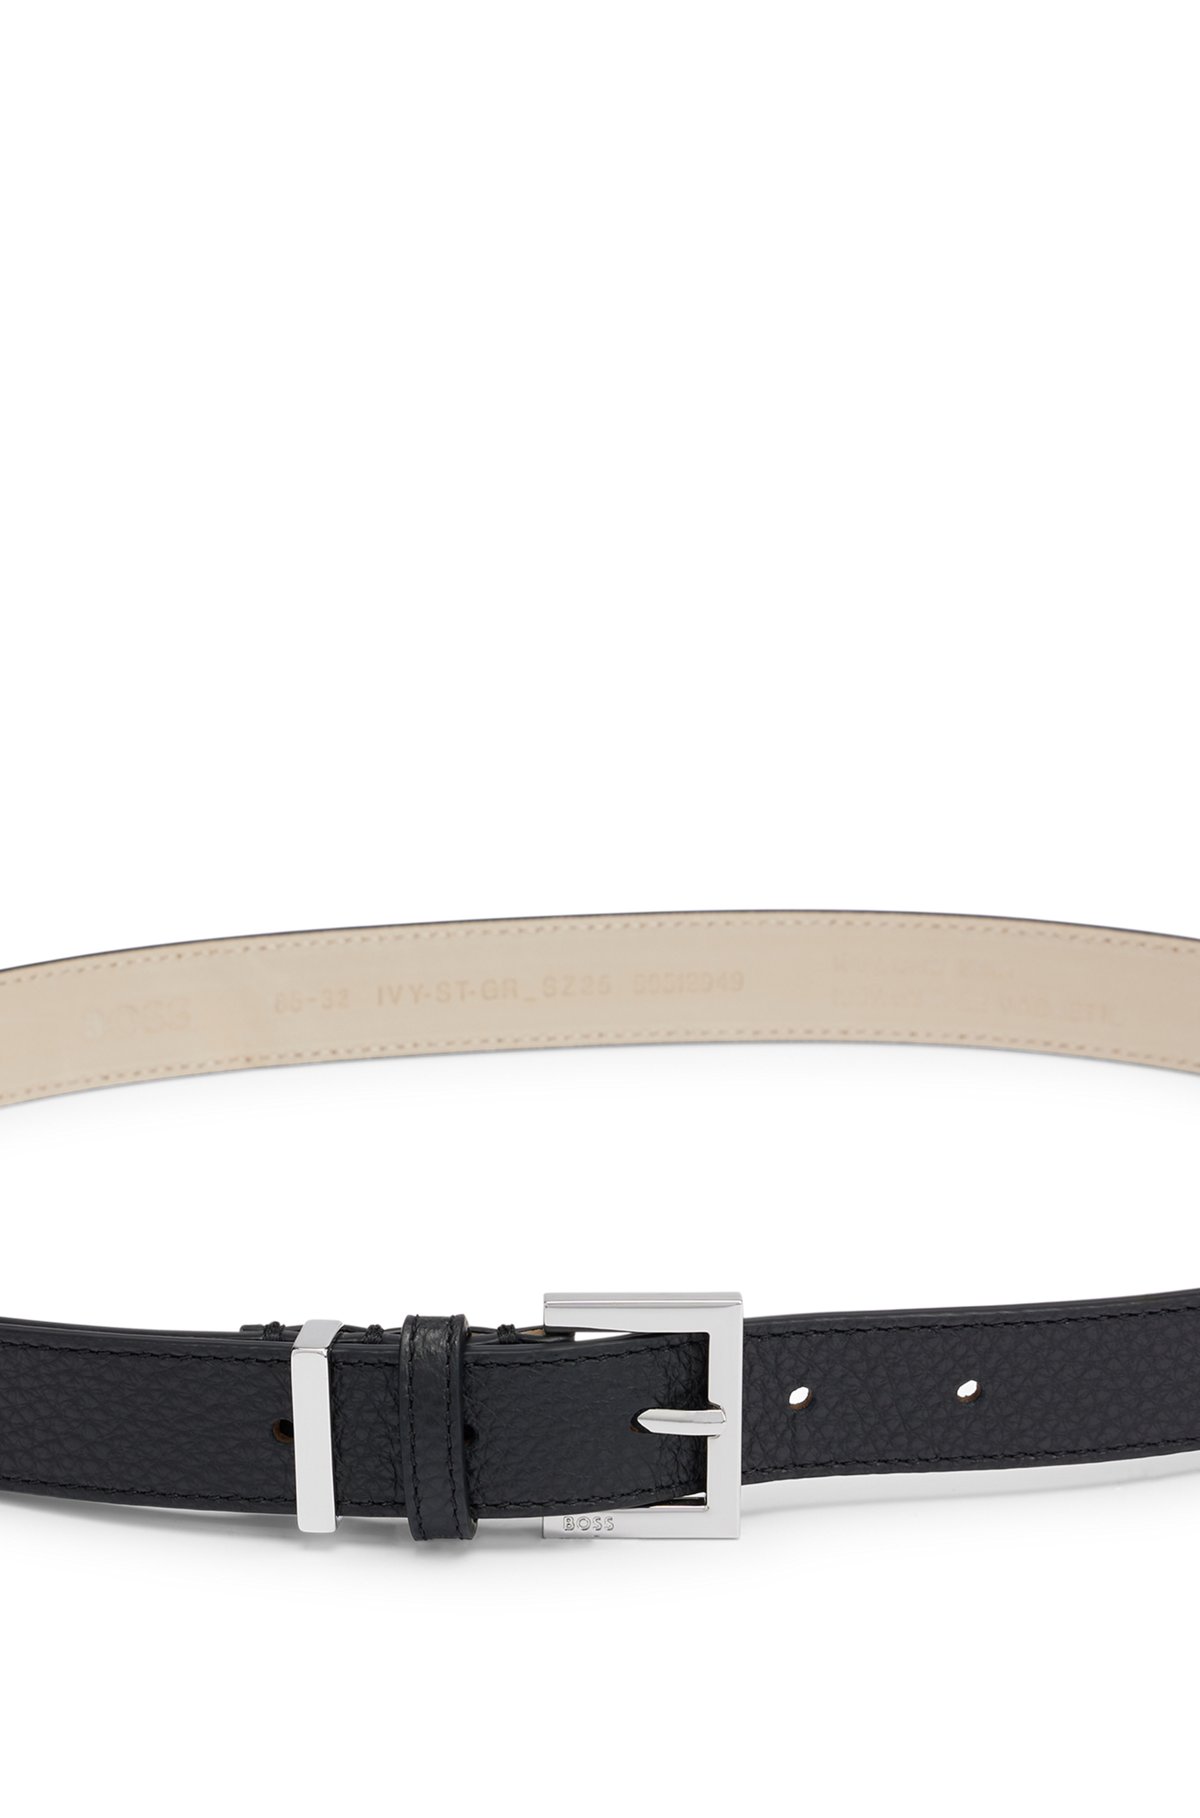 Italian-leather belt with polished silver hardware, Black